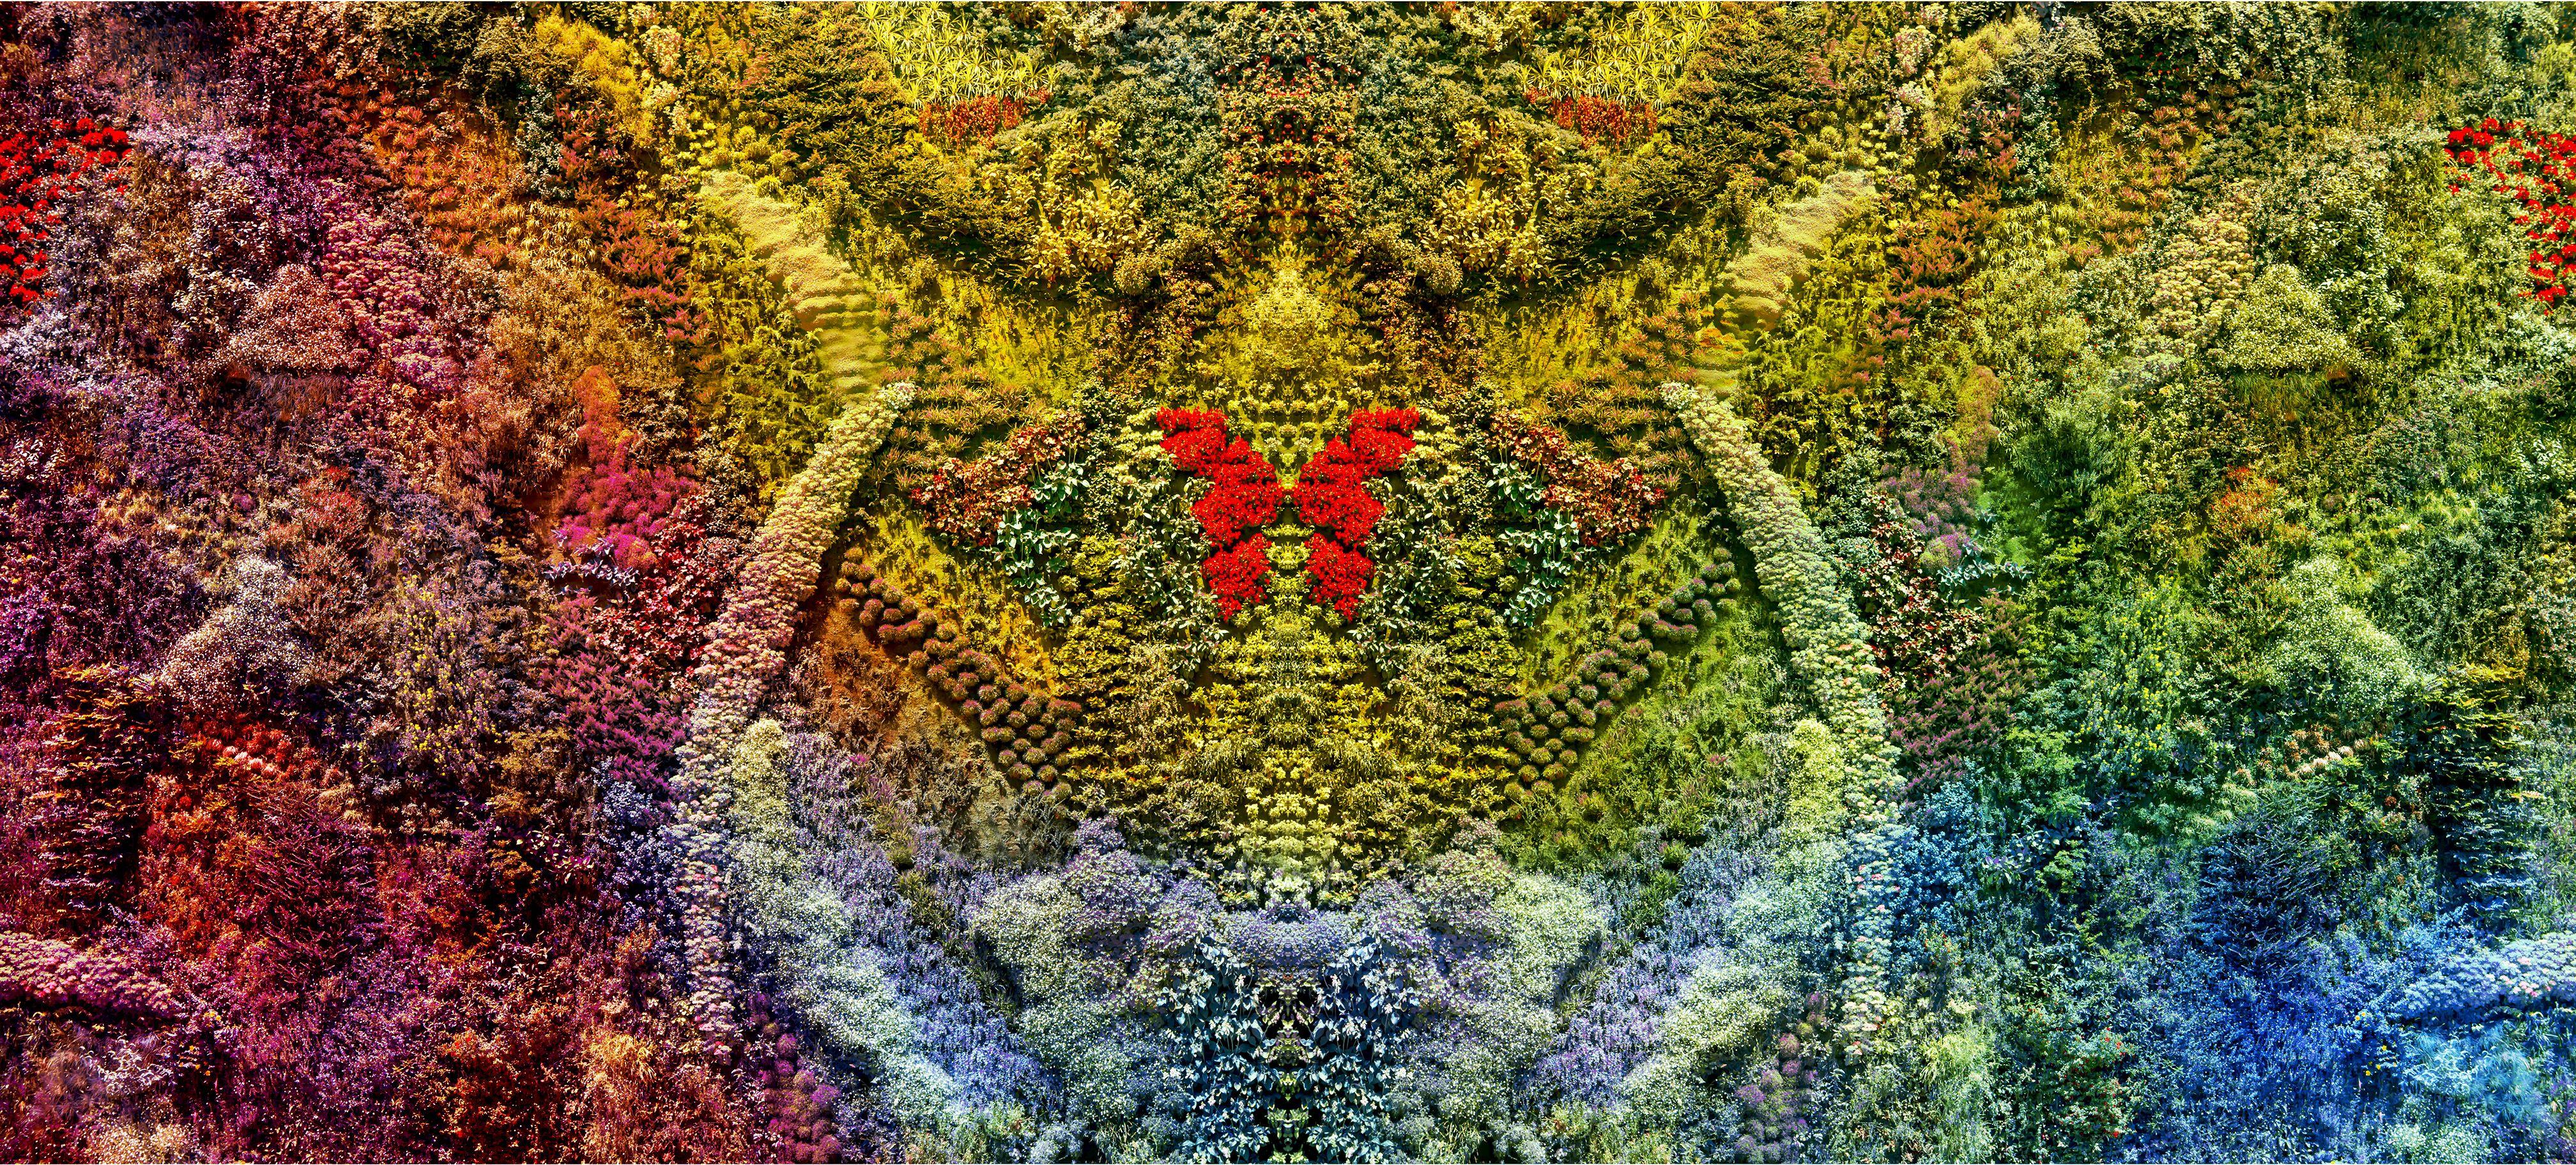 Viet Ha Tran Color Photograph - Wall of Nature VII, Photograph, C-Type